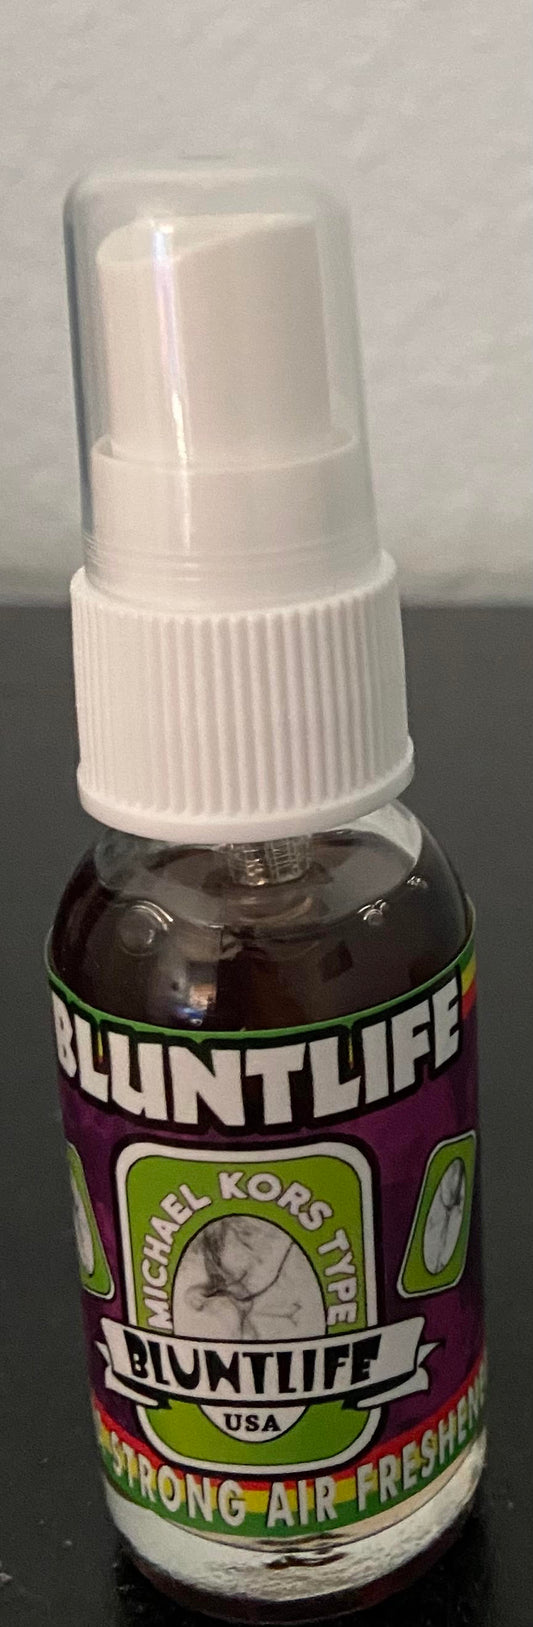 BluntLife Air Freshener Spray 1.0 oz. Bottle Long Lasting - Choose Your Scent (MICHAEL KORS TYPE)